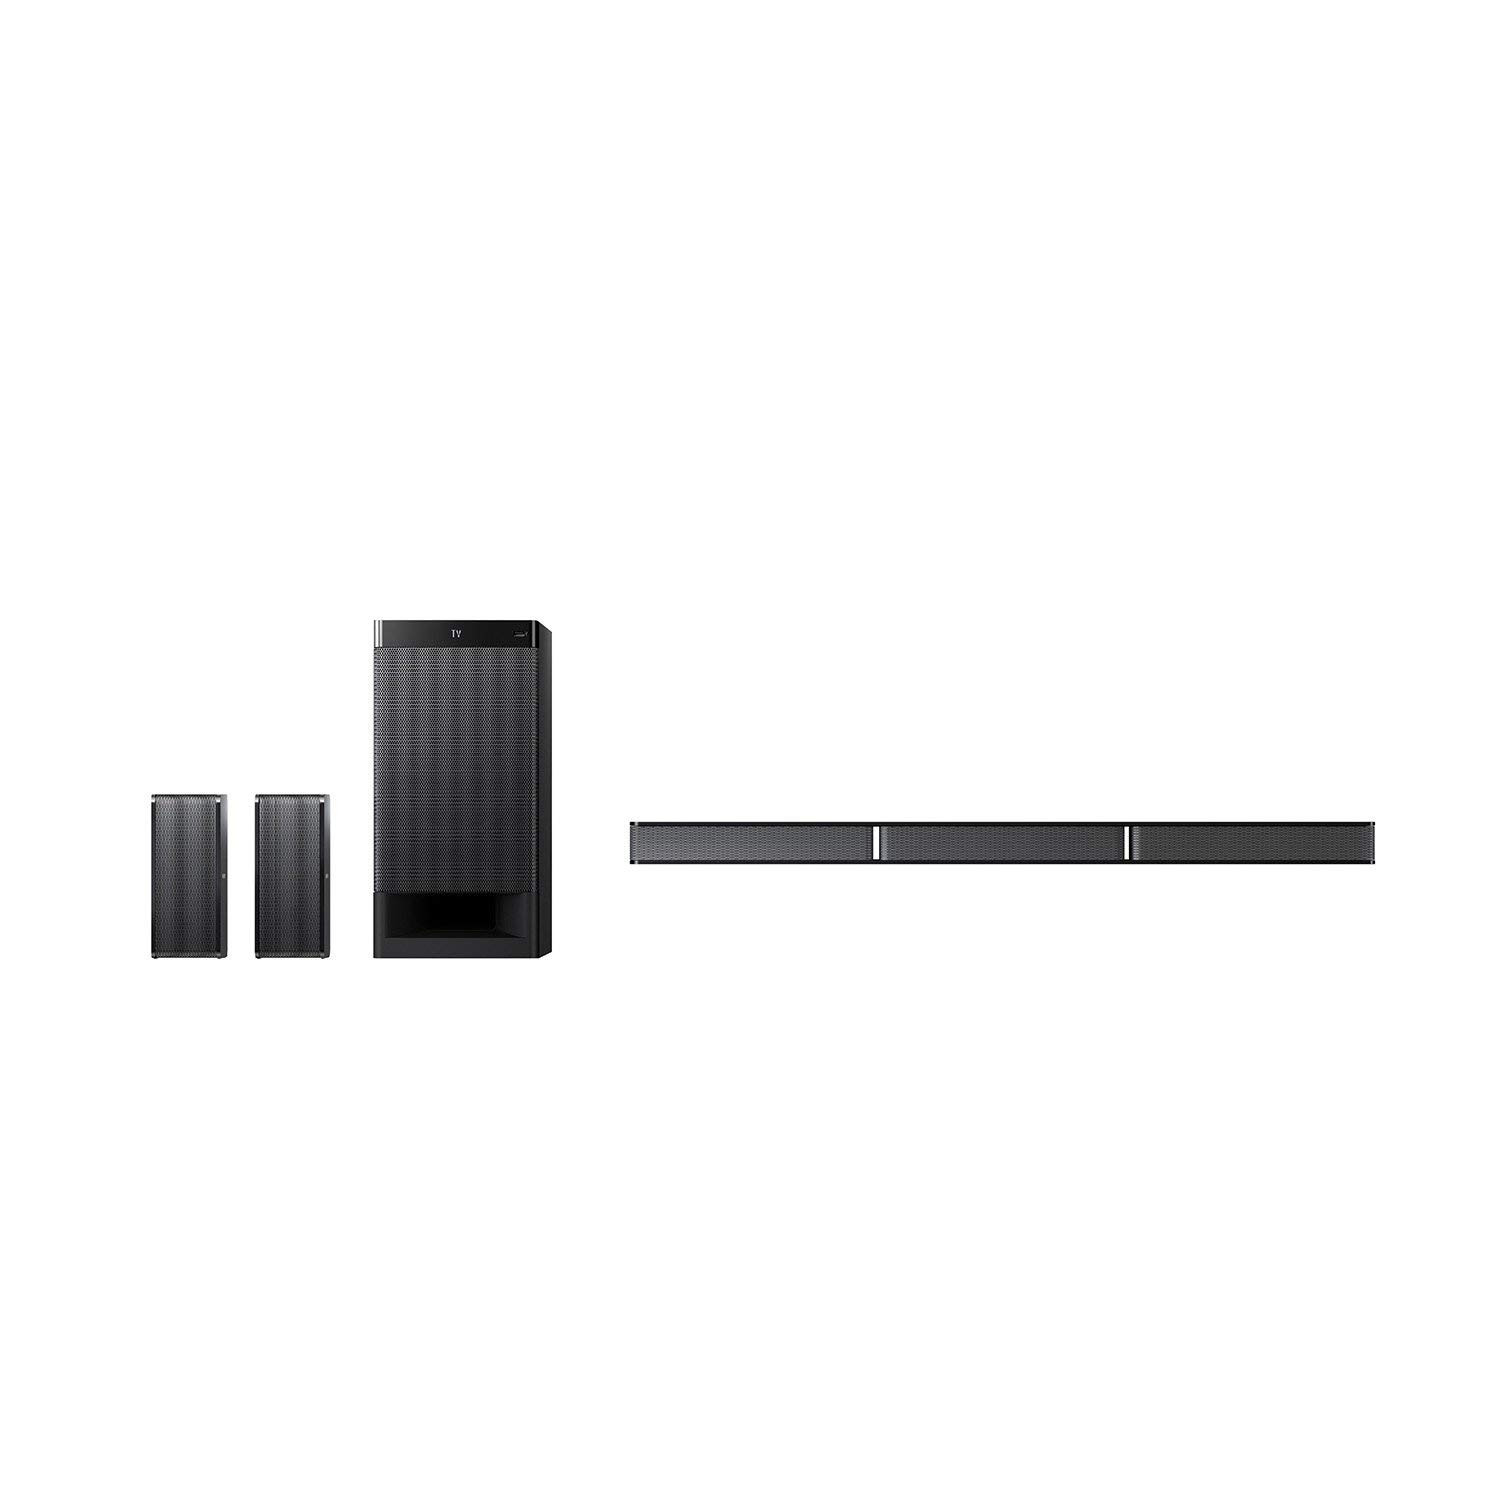 Sony HT-RT3 – Sound Bars